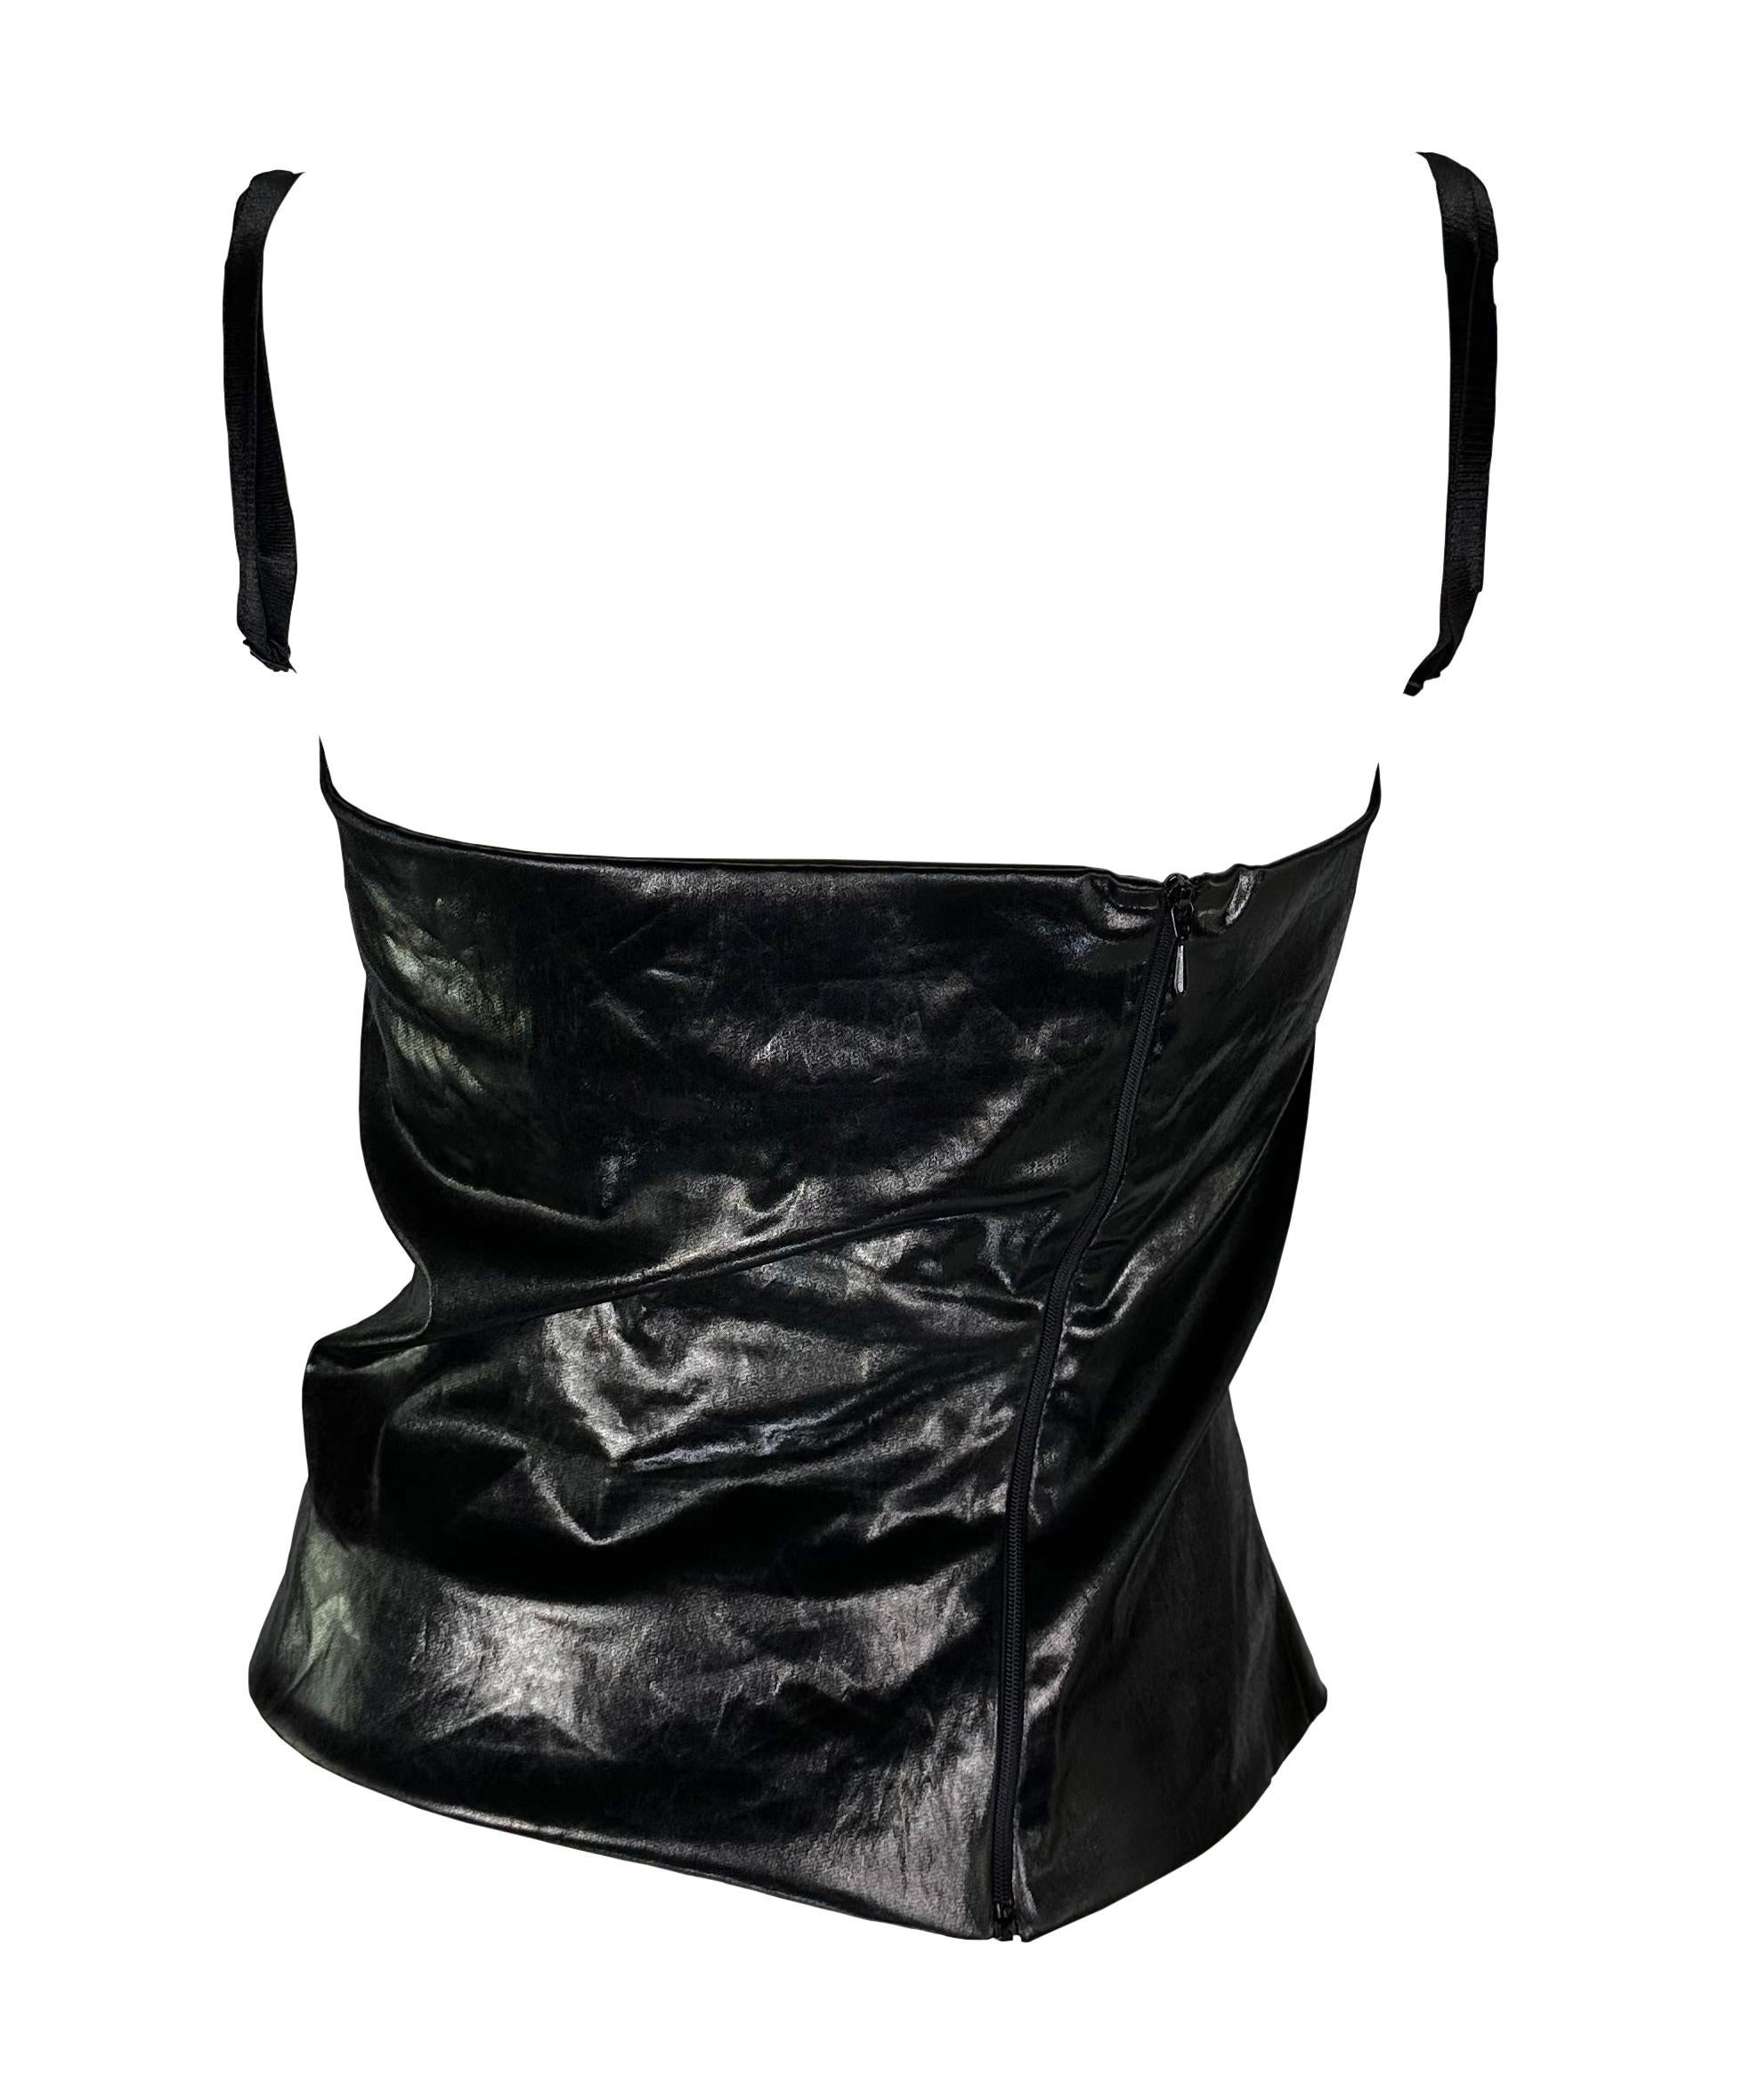 S/S 1999 Dolce & Gabbana Runway Wet Look Black Stretch Bustier Bra Crop Top For Sale 1